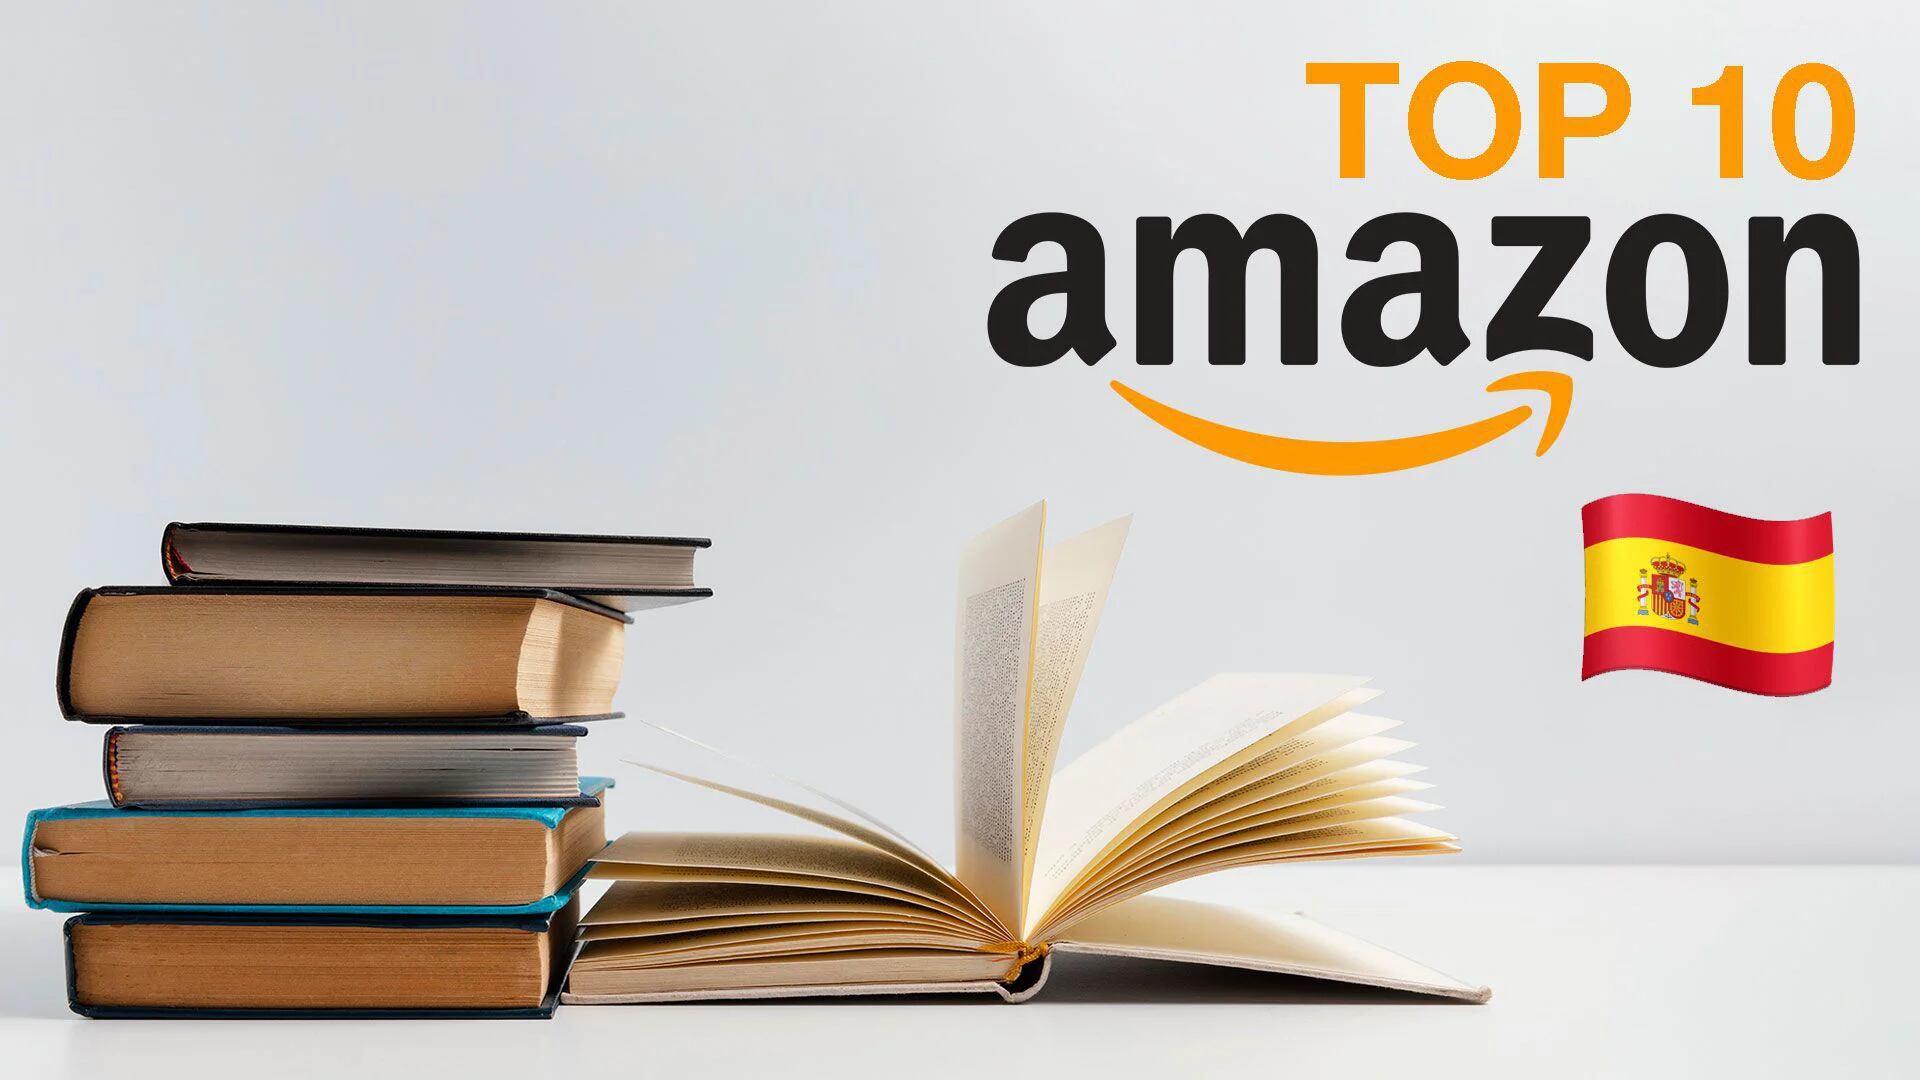 Contribuyente especificación Me gusta Libros de Amazon España más populares para comprar este día - Infobae